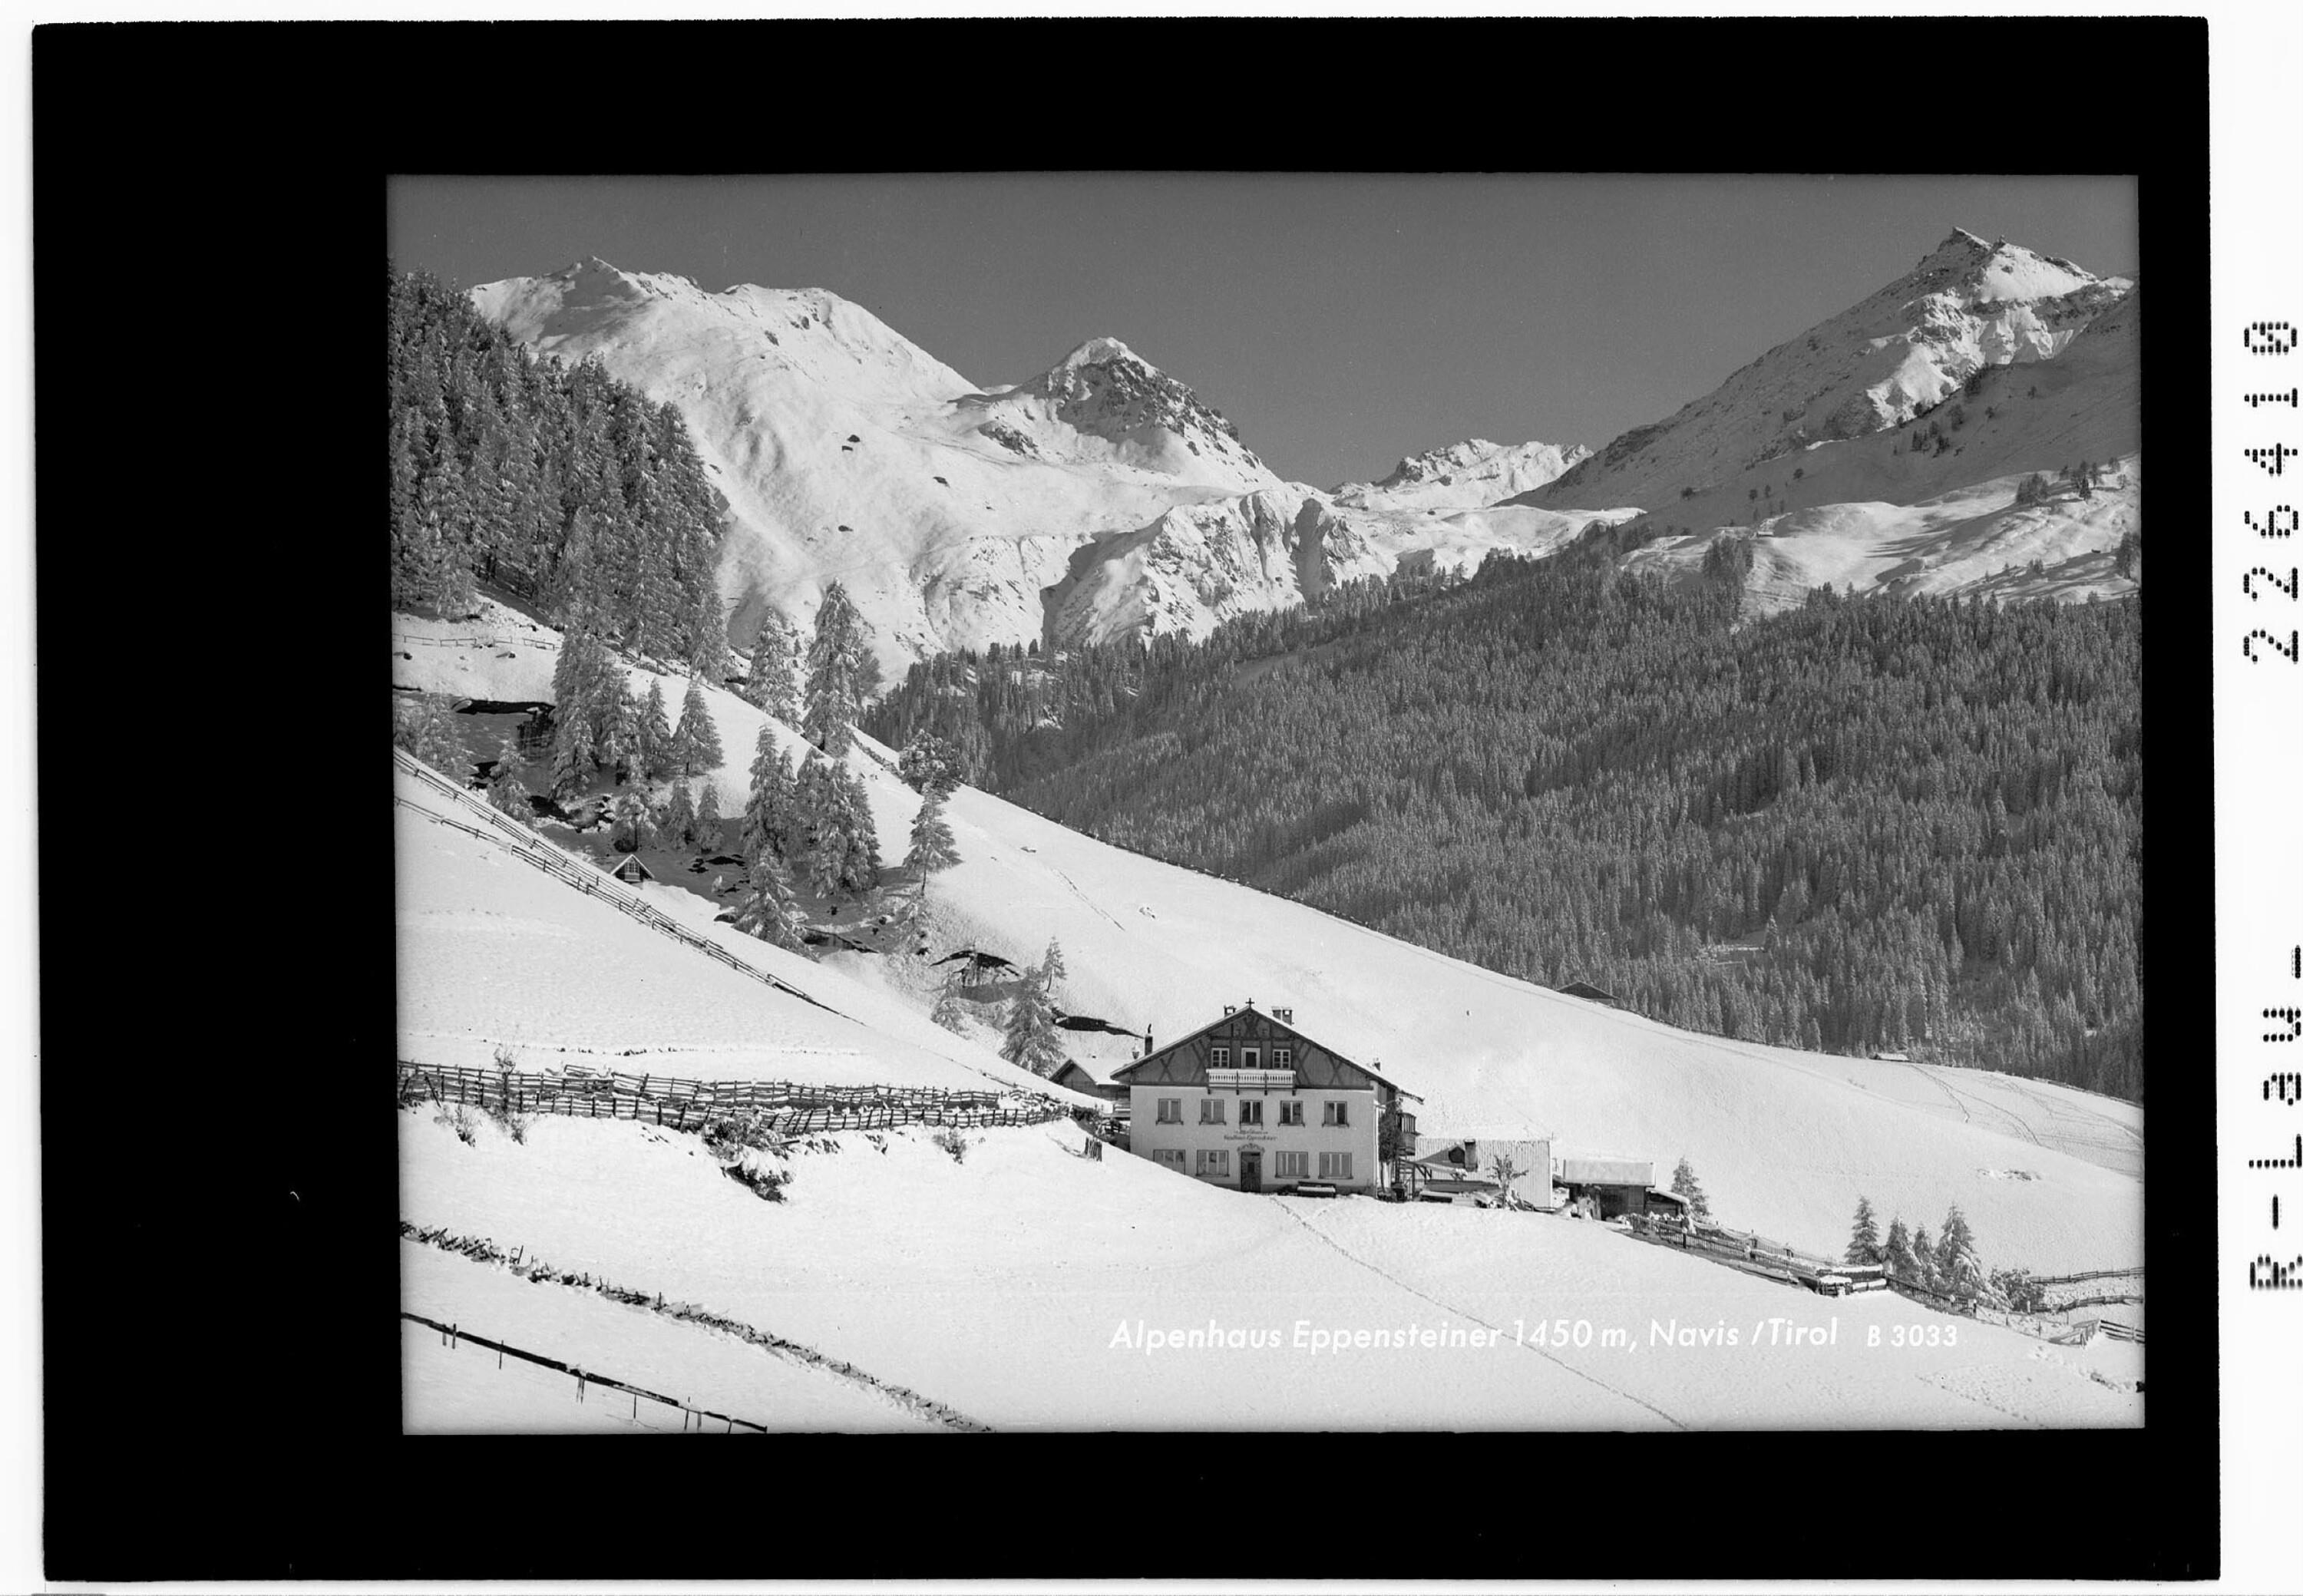 Alpenhaus Eppensteiner 1450 m / Navis / Tirol></div>


    <hr>
    <div class=